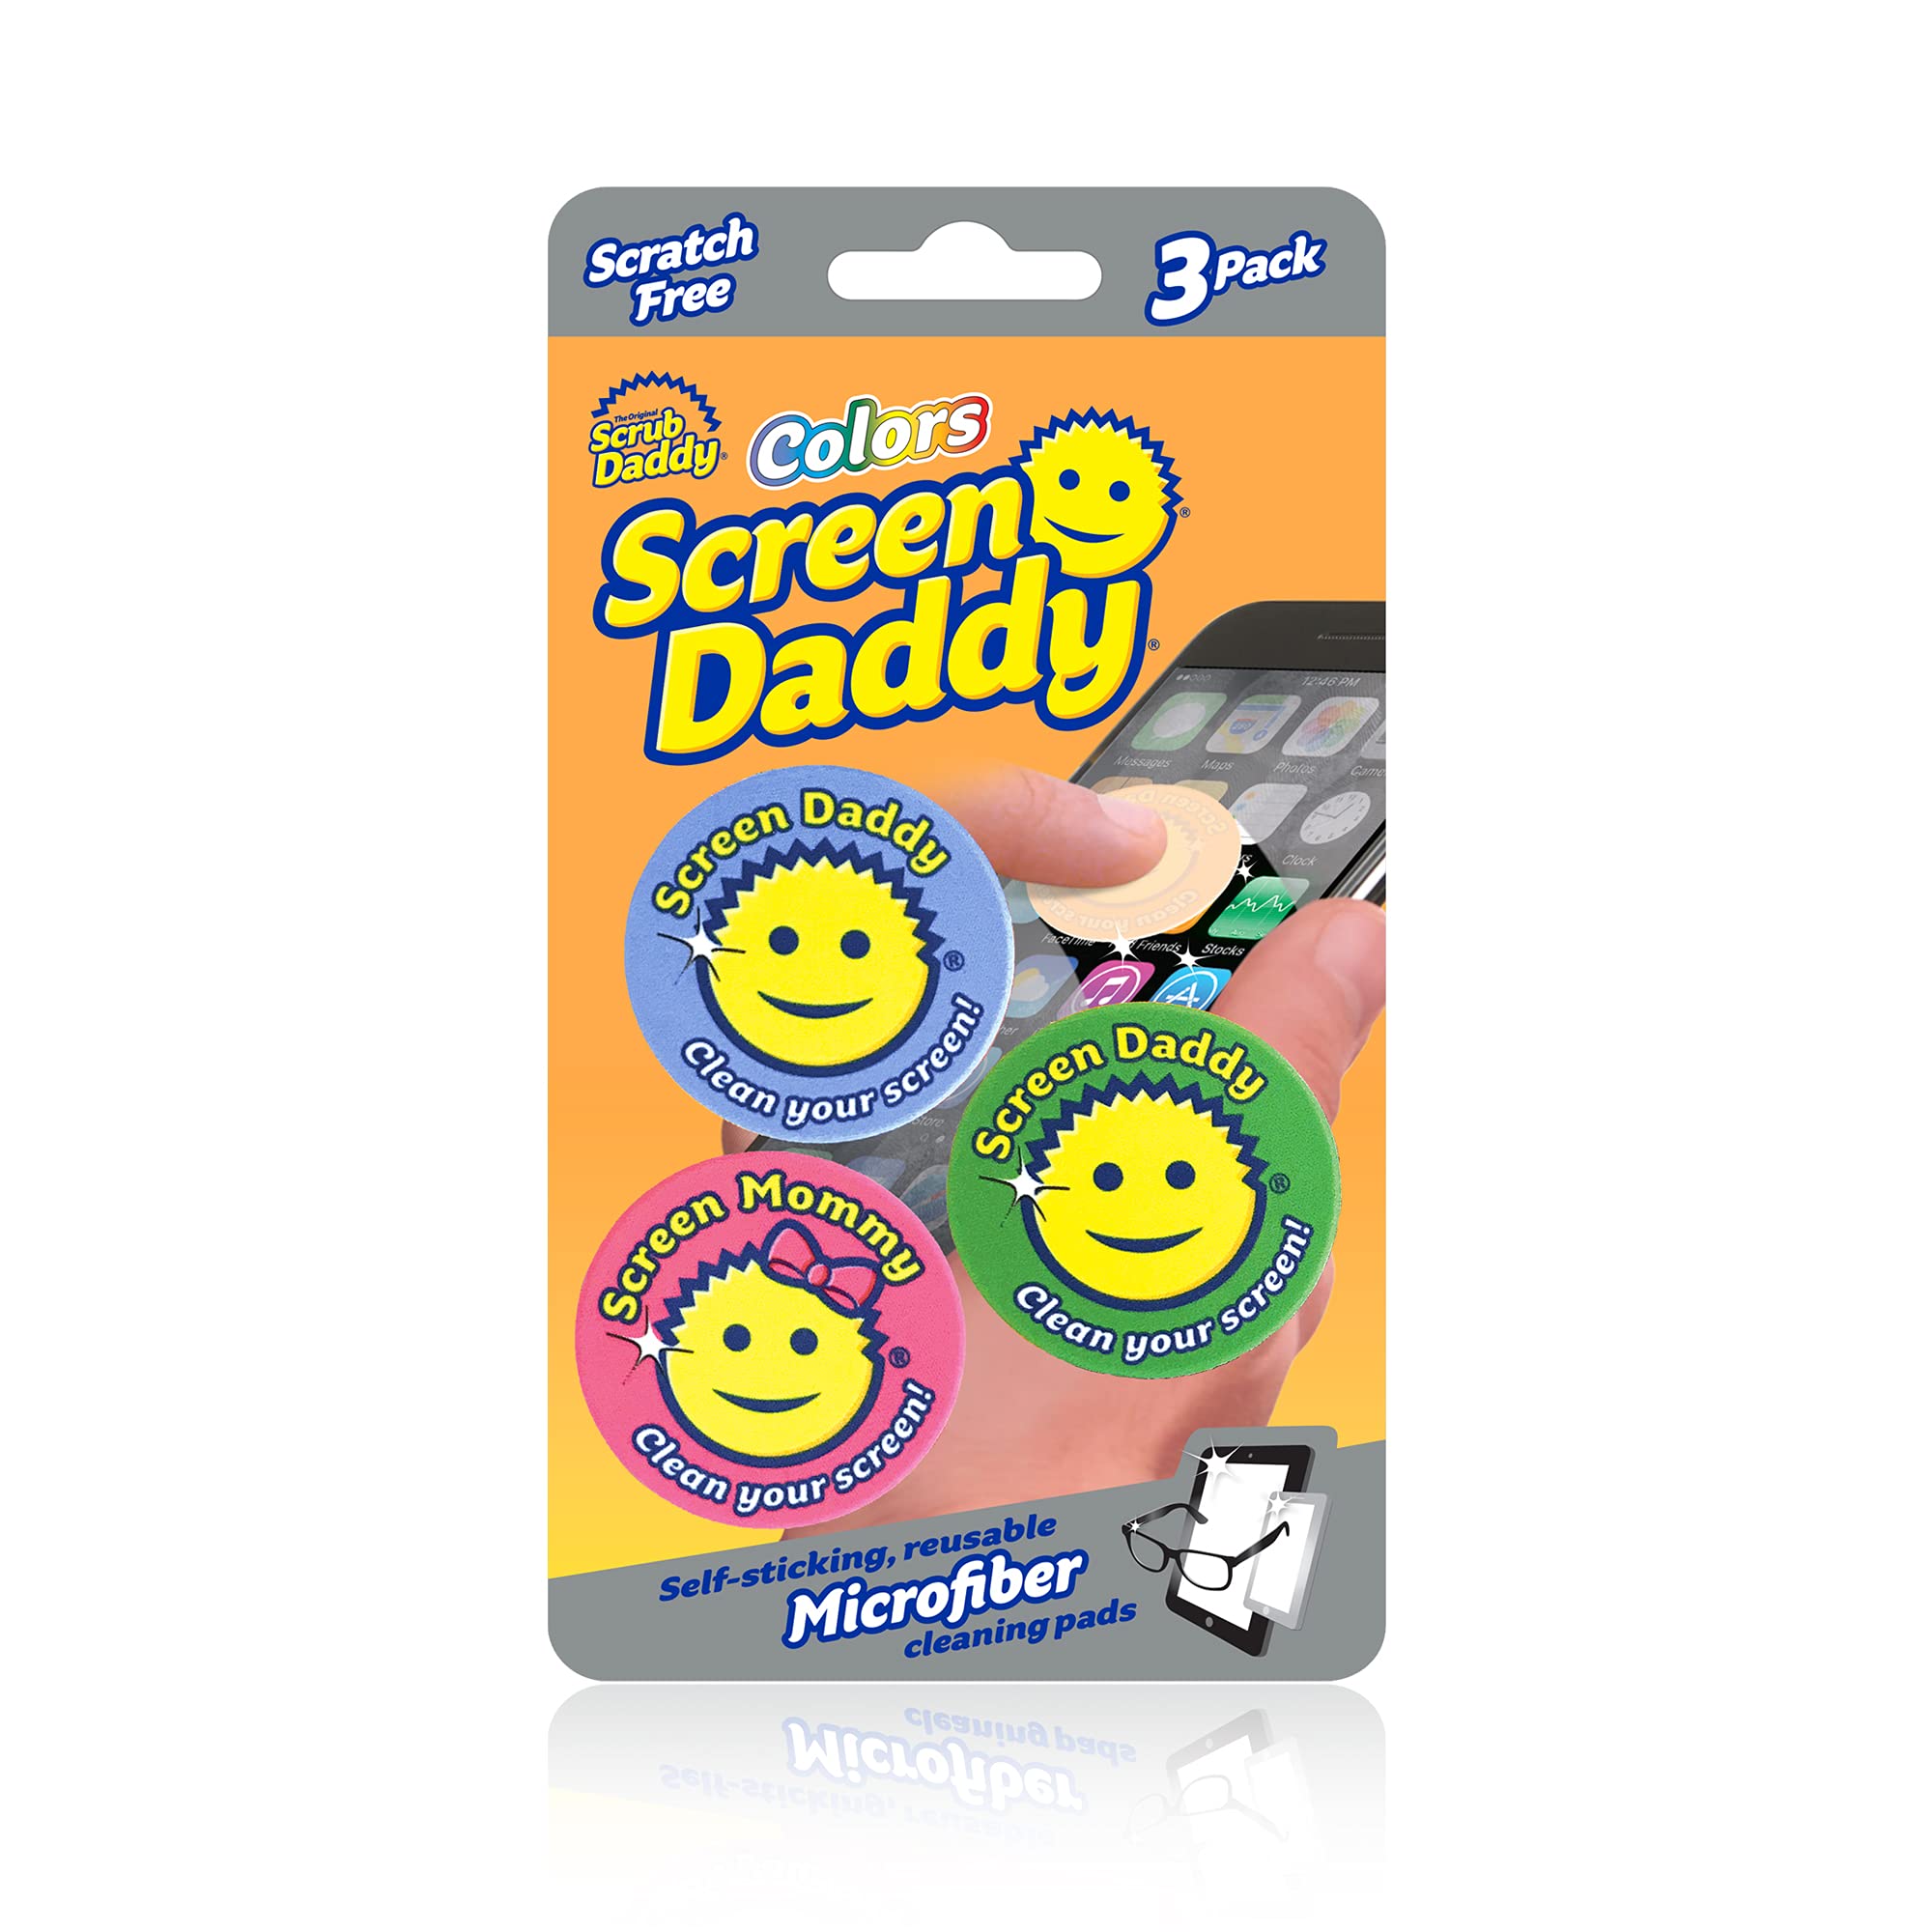 Trying out Scrub Daddy Damp Duster ✨#clean #cleantok #scrubdaddy #clea